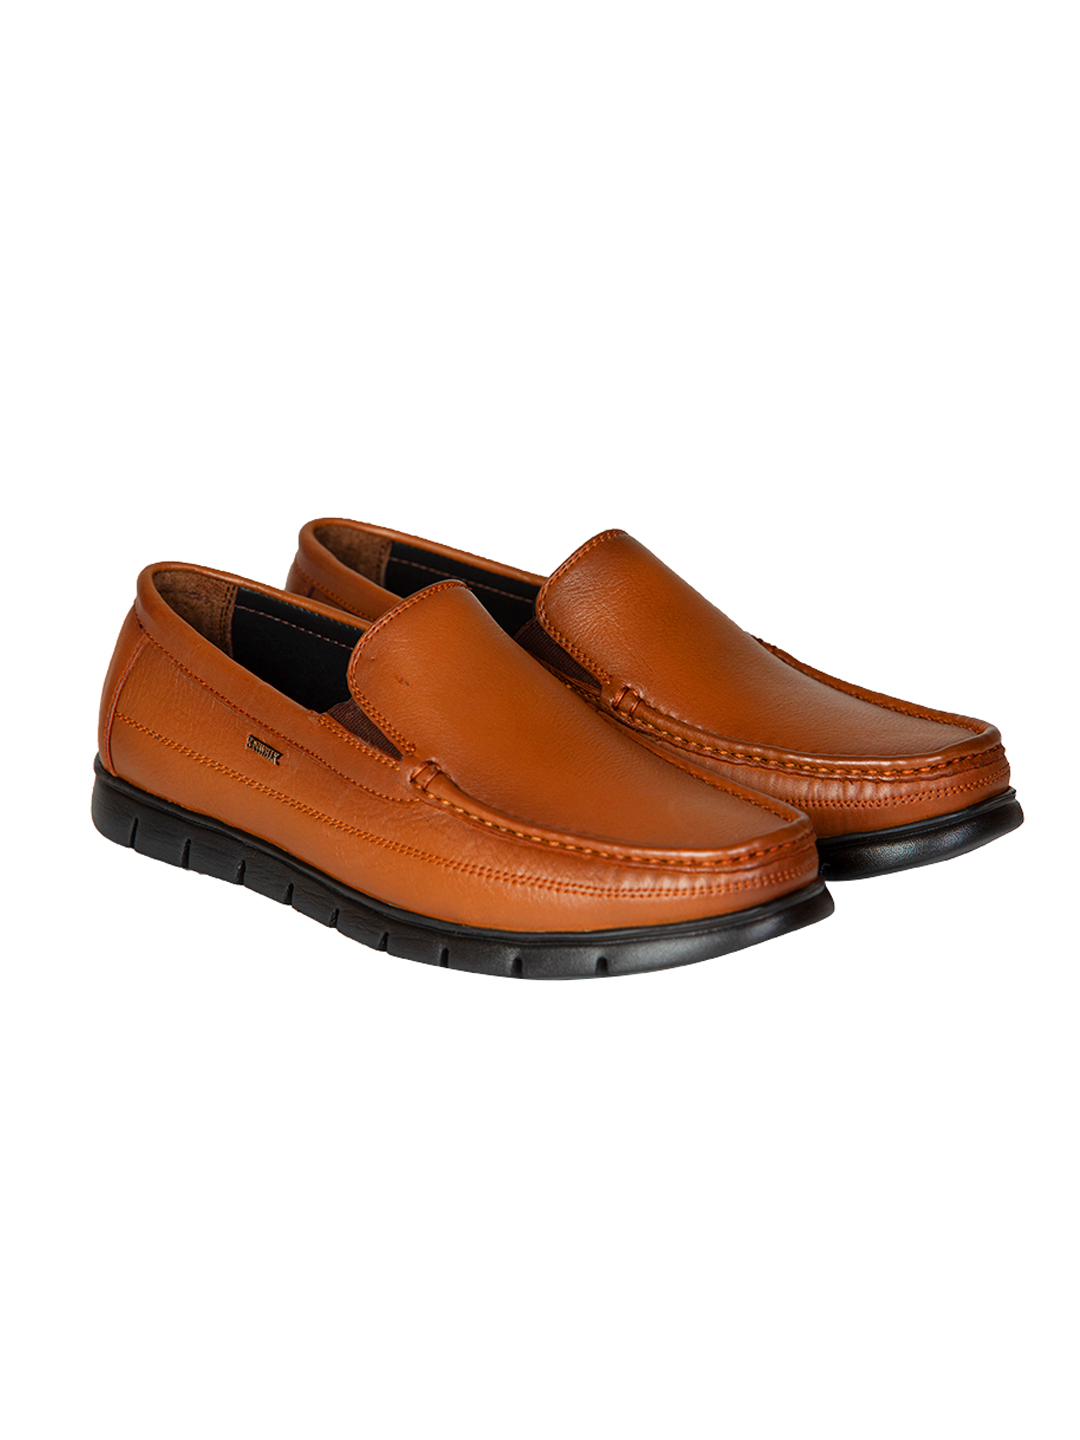 Buy Von Wellx Germany Comfort Tan Zion Shoes Online in Nashik